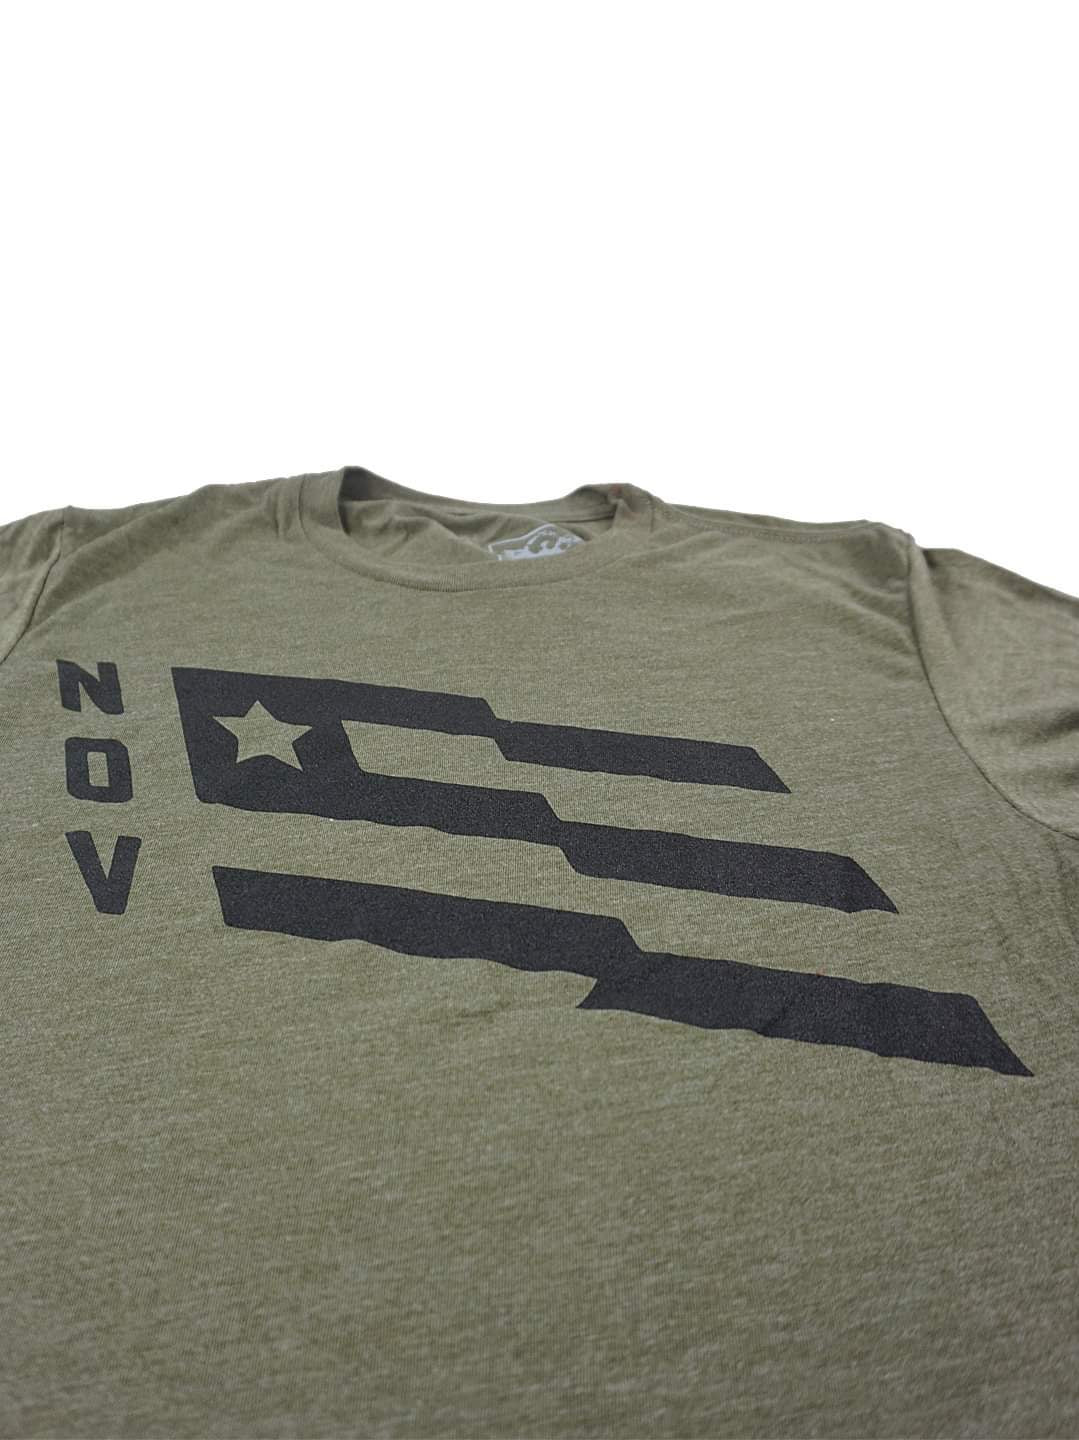 N.O.V. Flag Shirt - Army